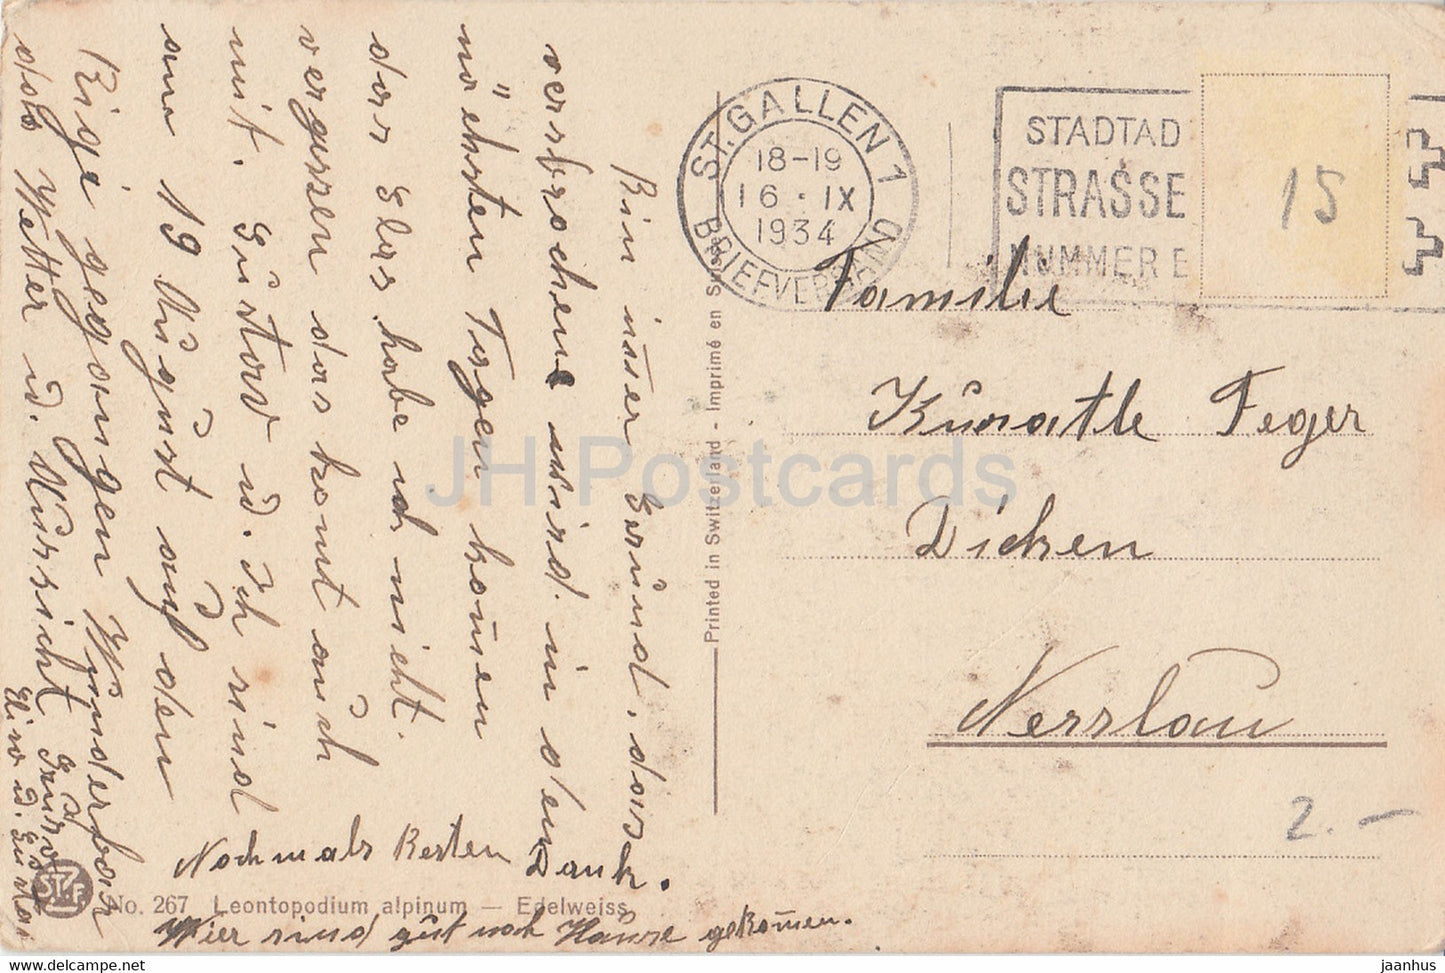 Leontopodium alpinum - Edelweiss - fleurs - 267 - carte postale ancienne - 1934 - Suisse - utilisé